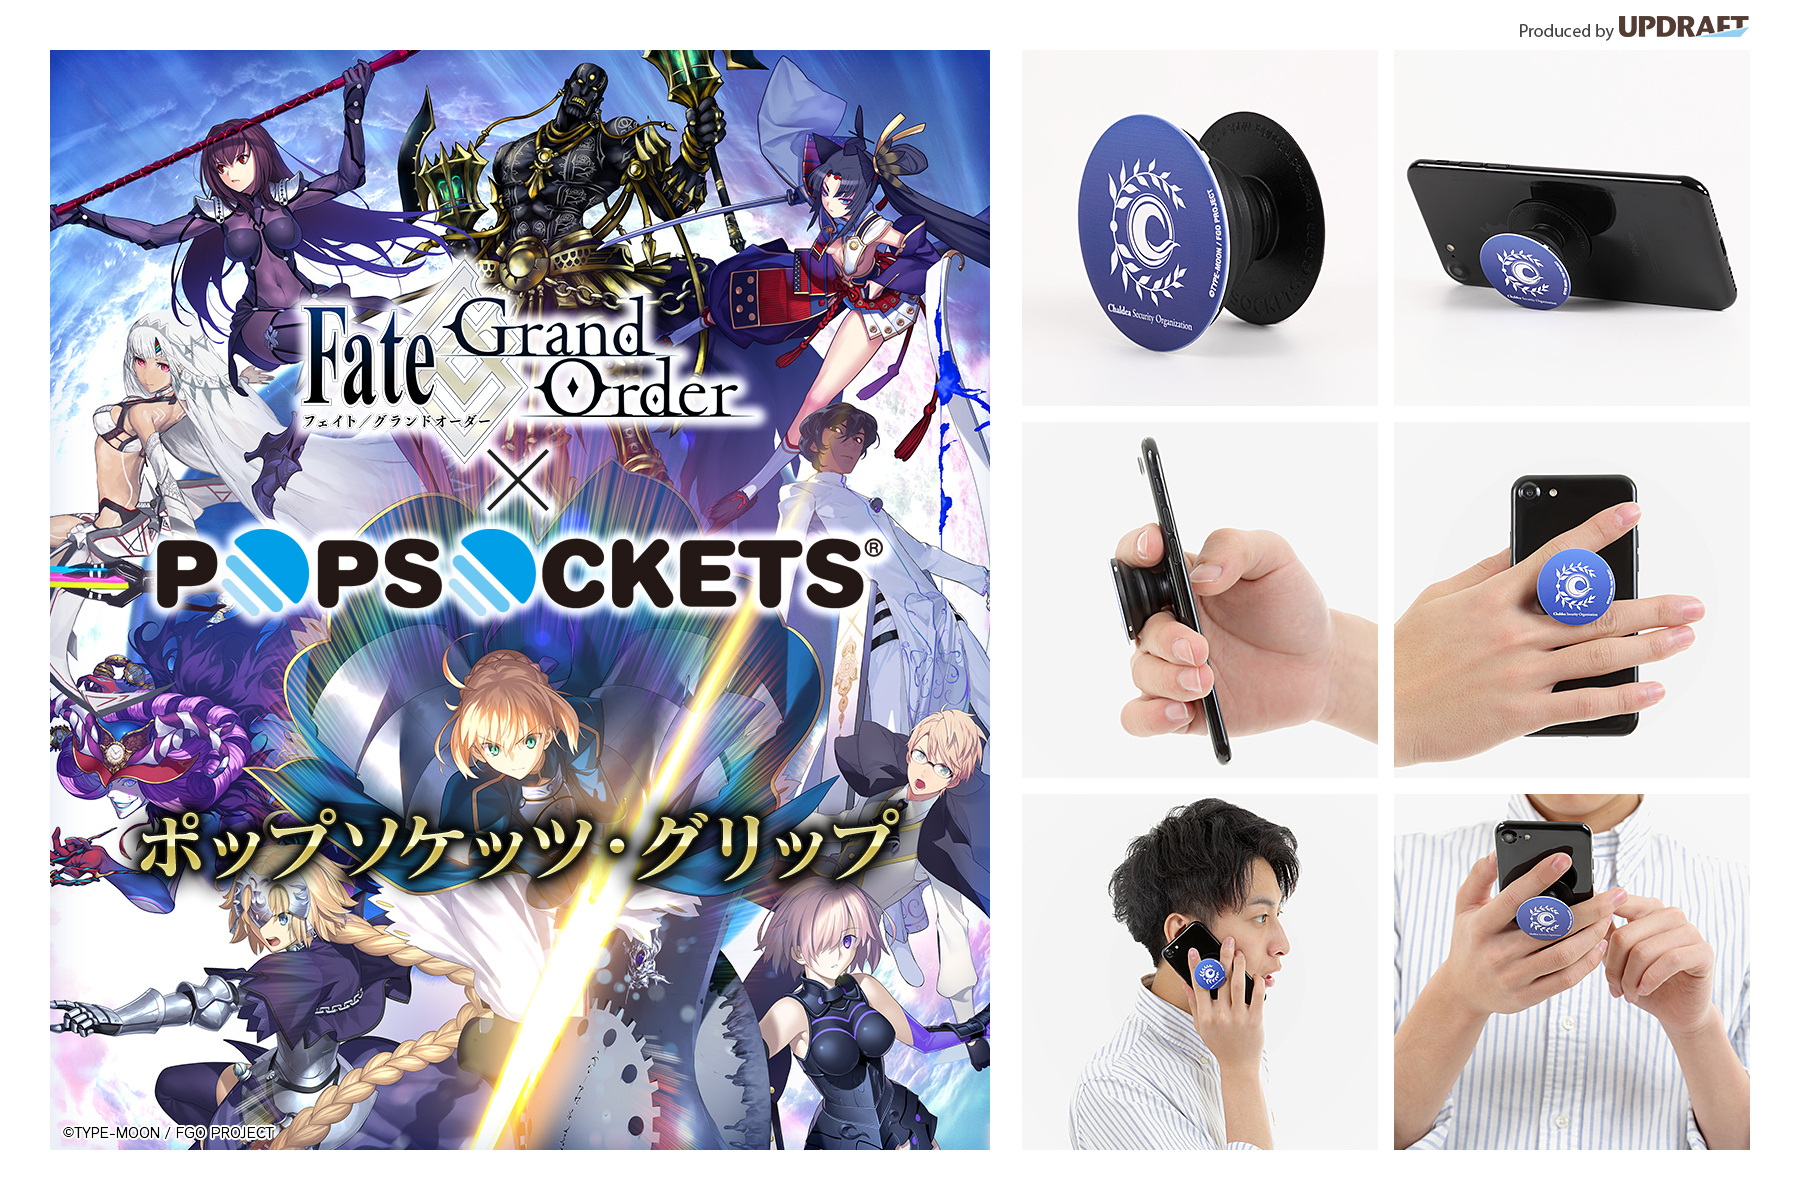 Fate Grand Order ポップソケッツ グリップ 11月30日 金 に限定販売開始 株式会社アップドラフトのプレスリリース